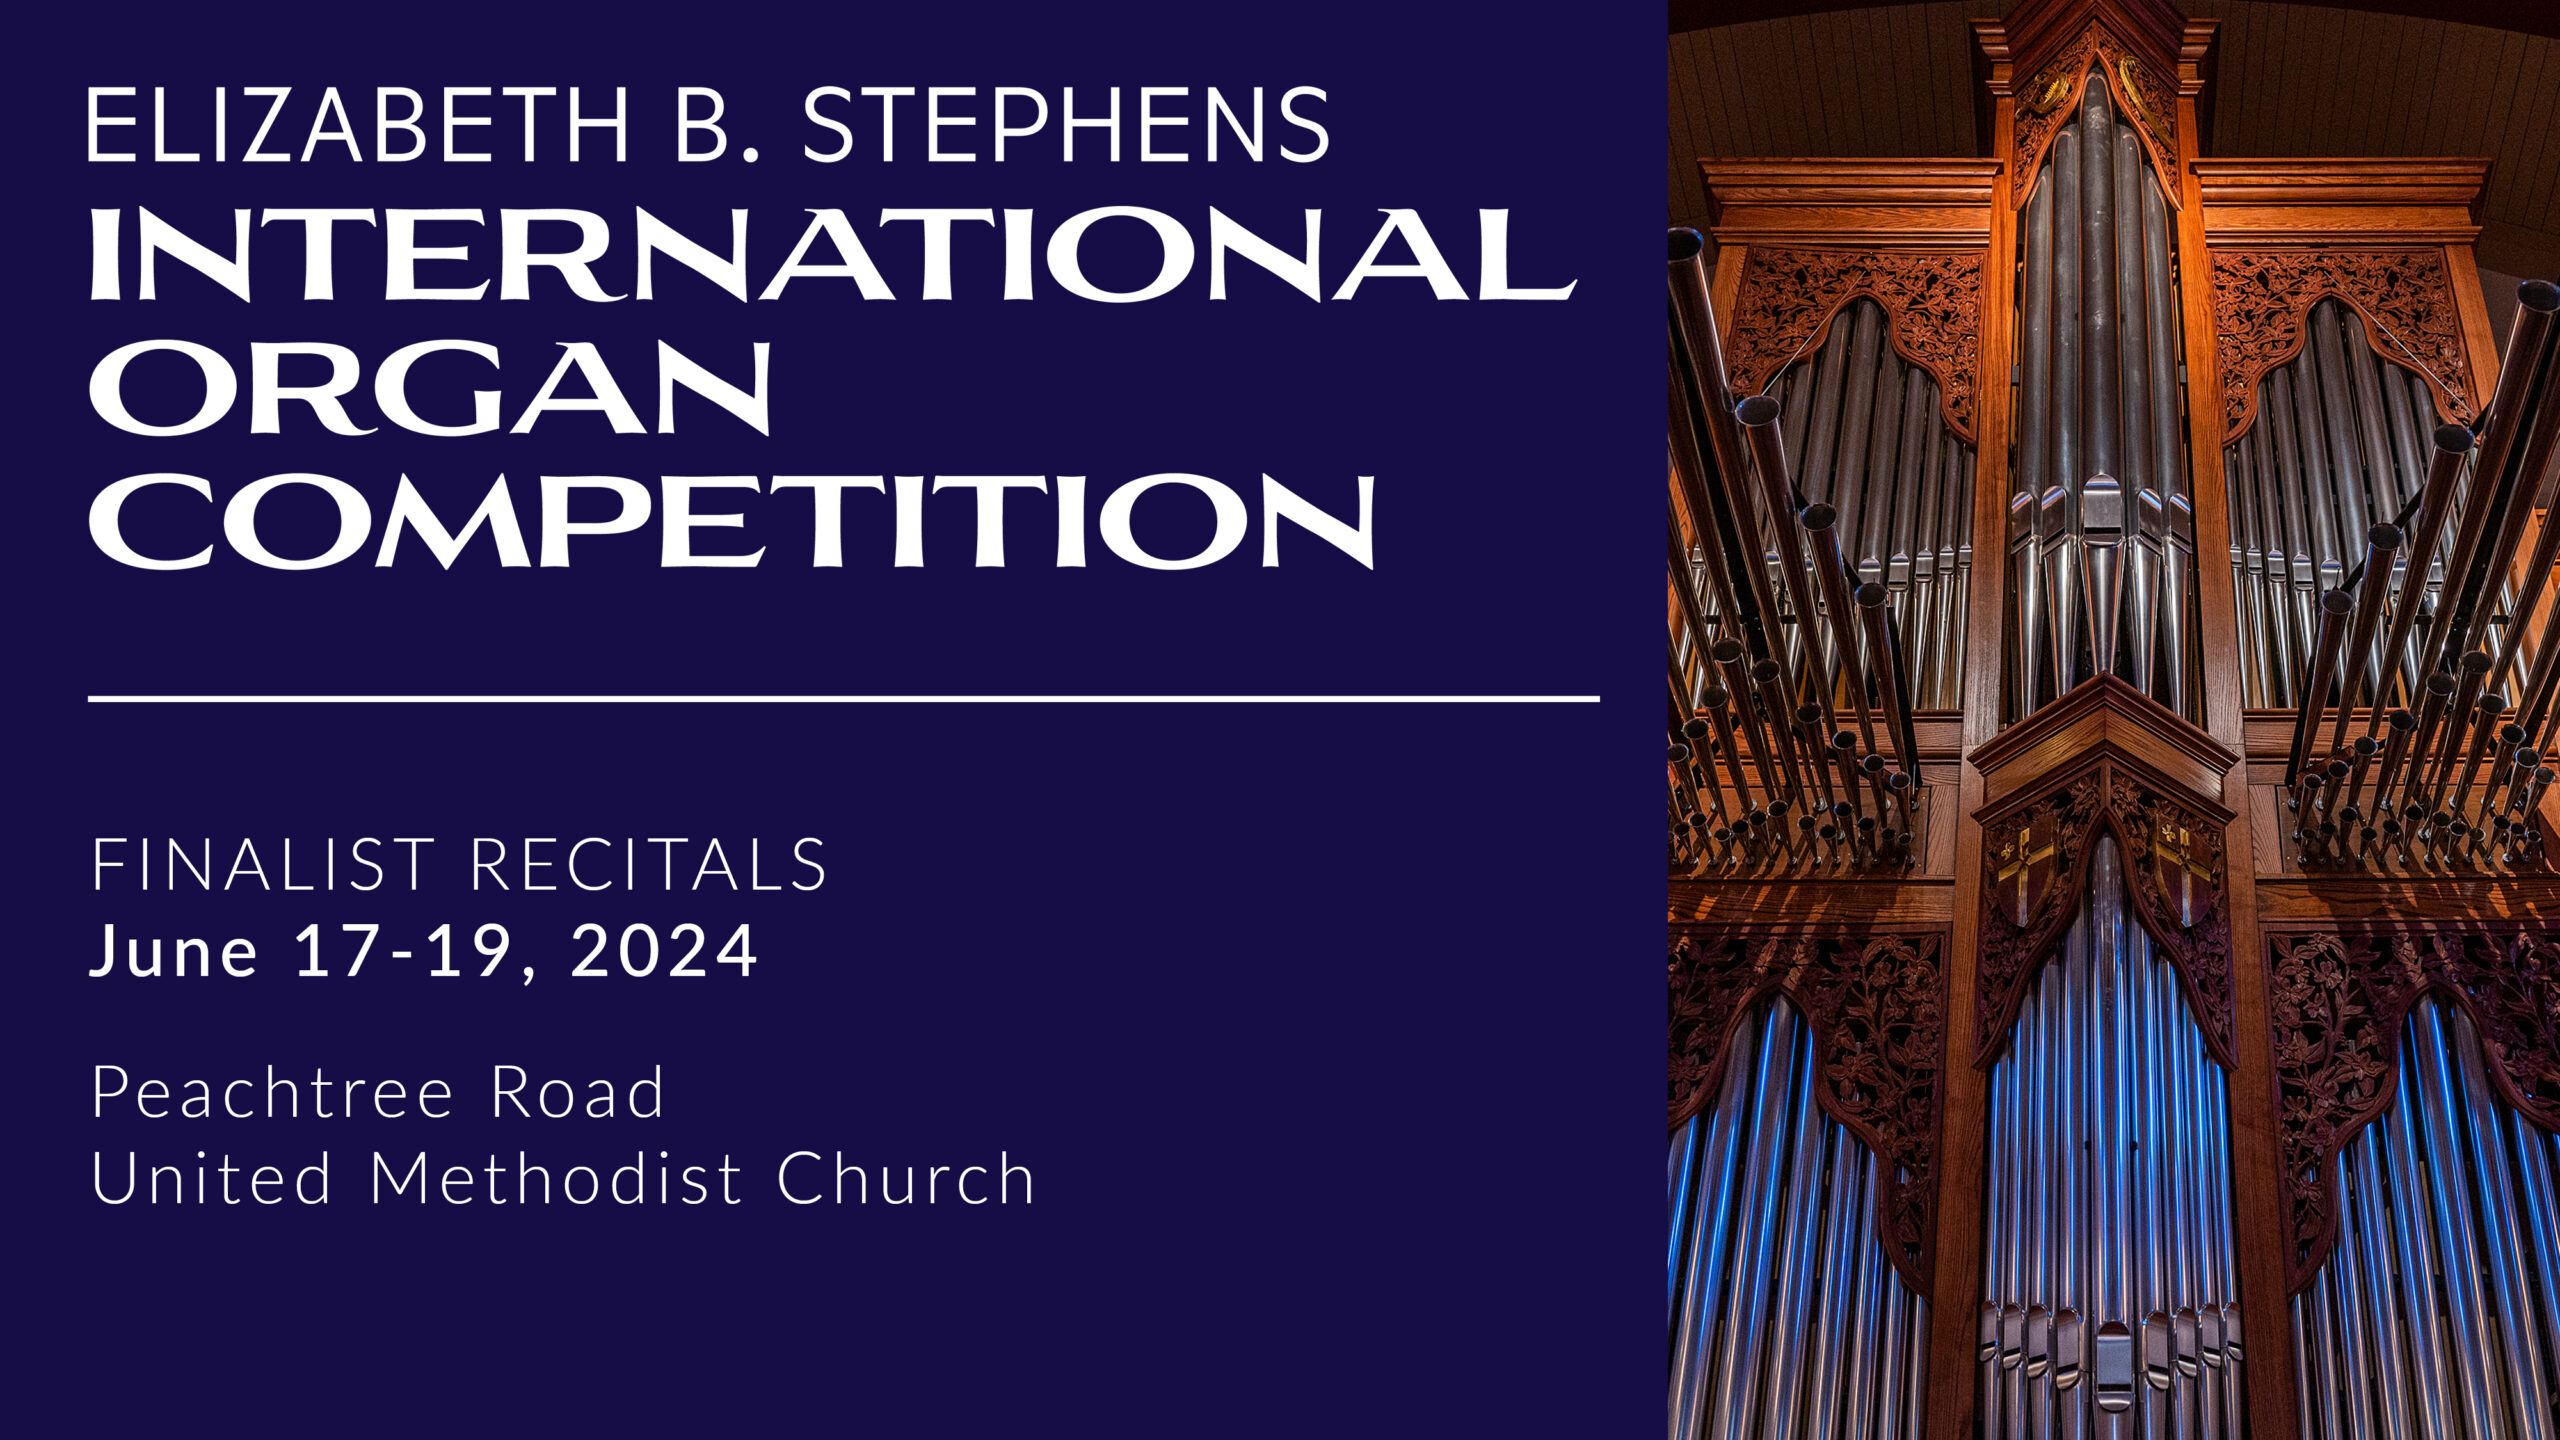 Elizabeth B Stephens International Organ Competition at Peachtree Road UMC in Atlanta.